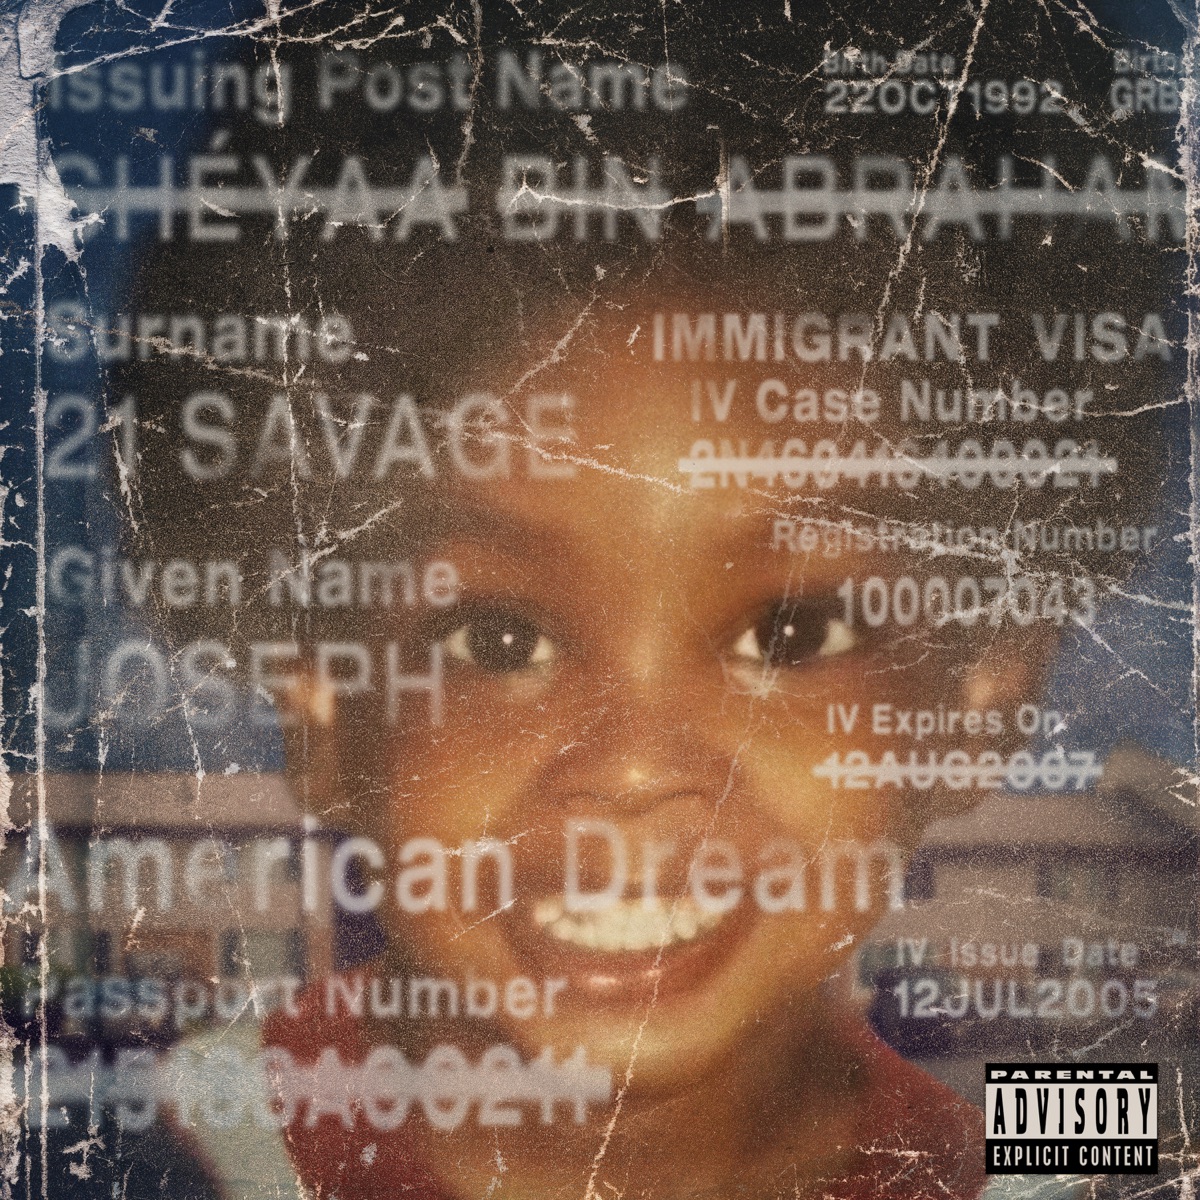 21+Savages+new+album%2C+American+Dream%2C+released+by+Epic+Studios.